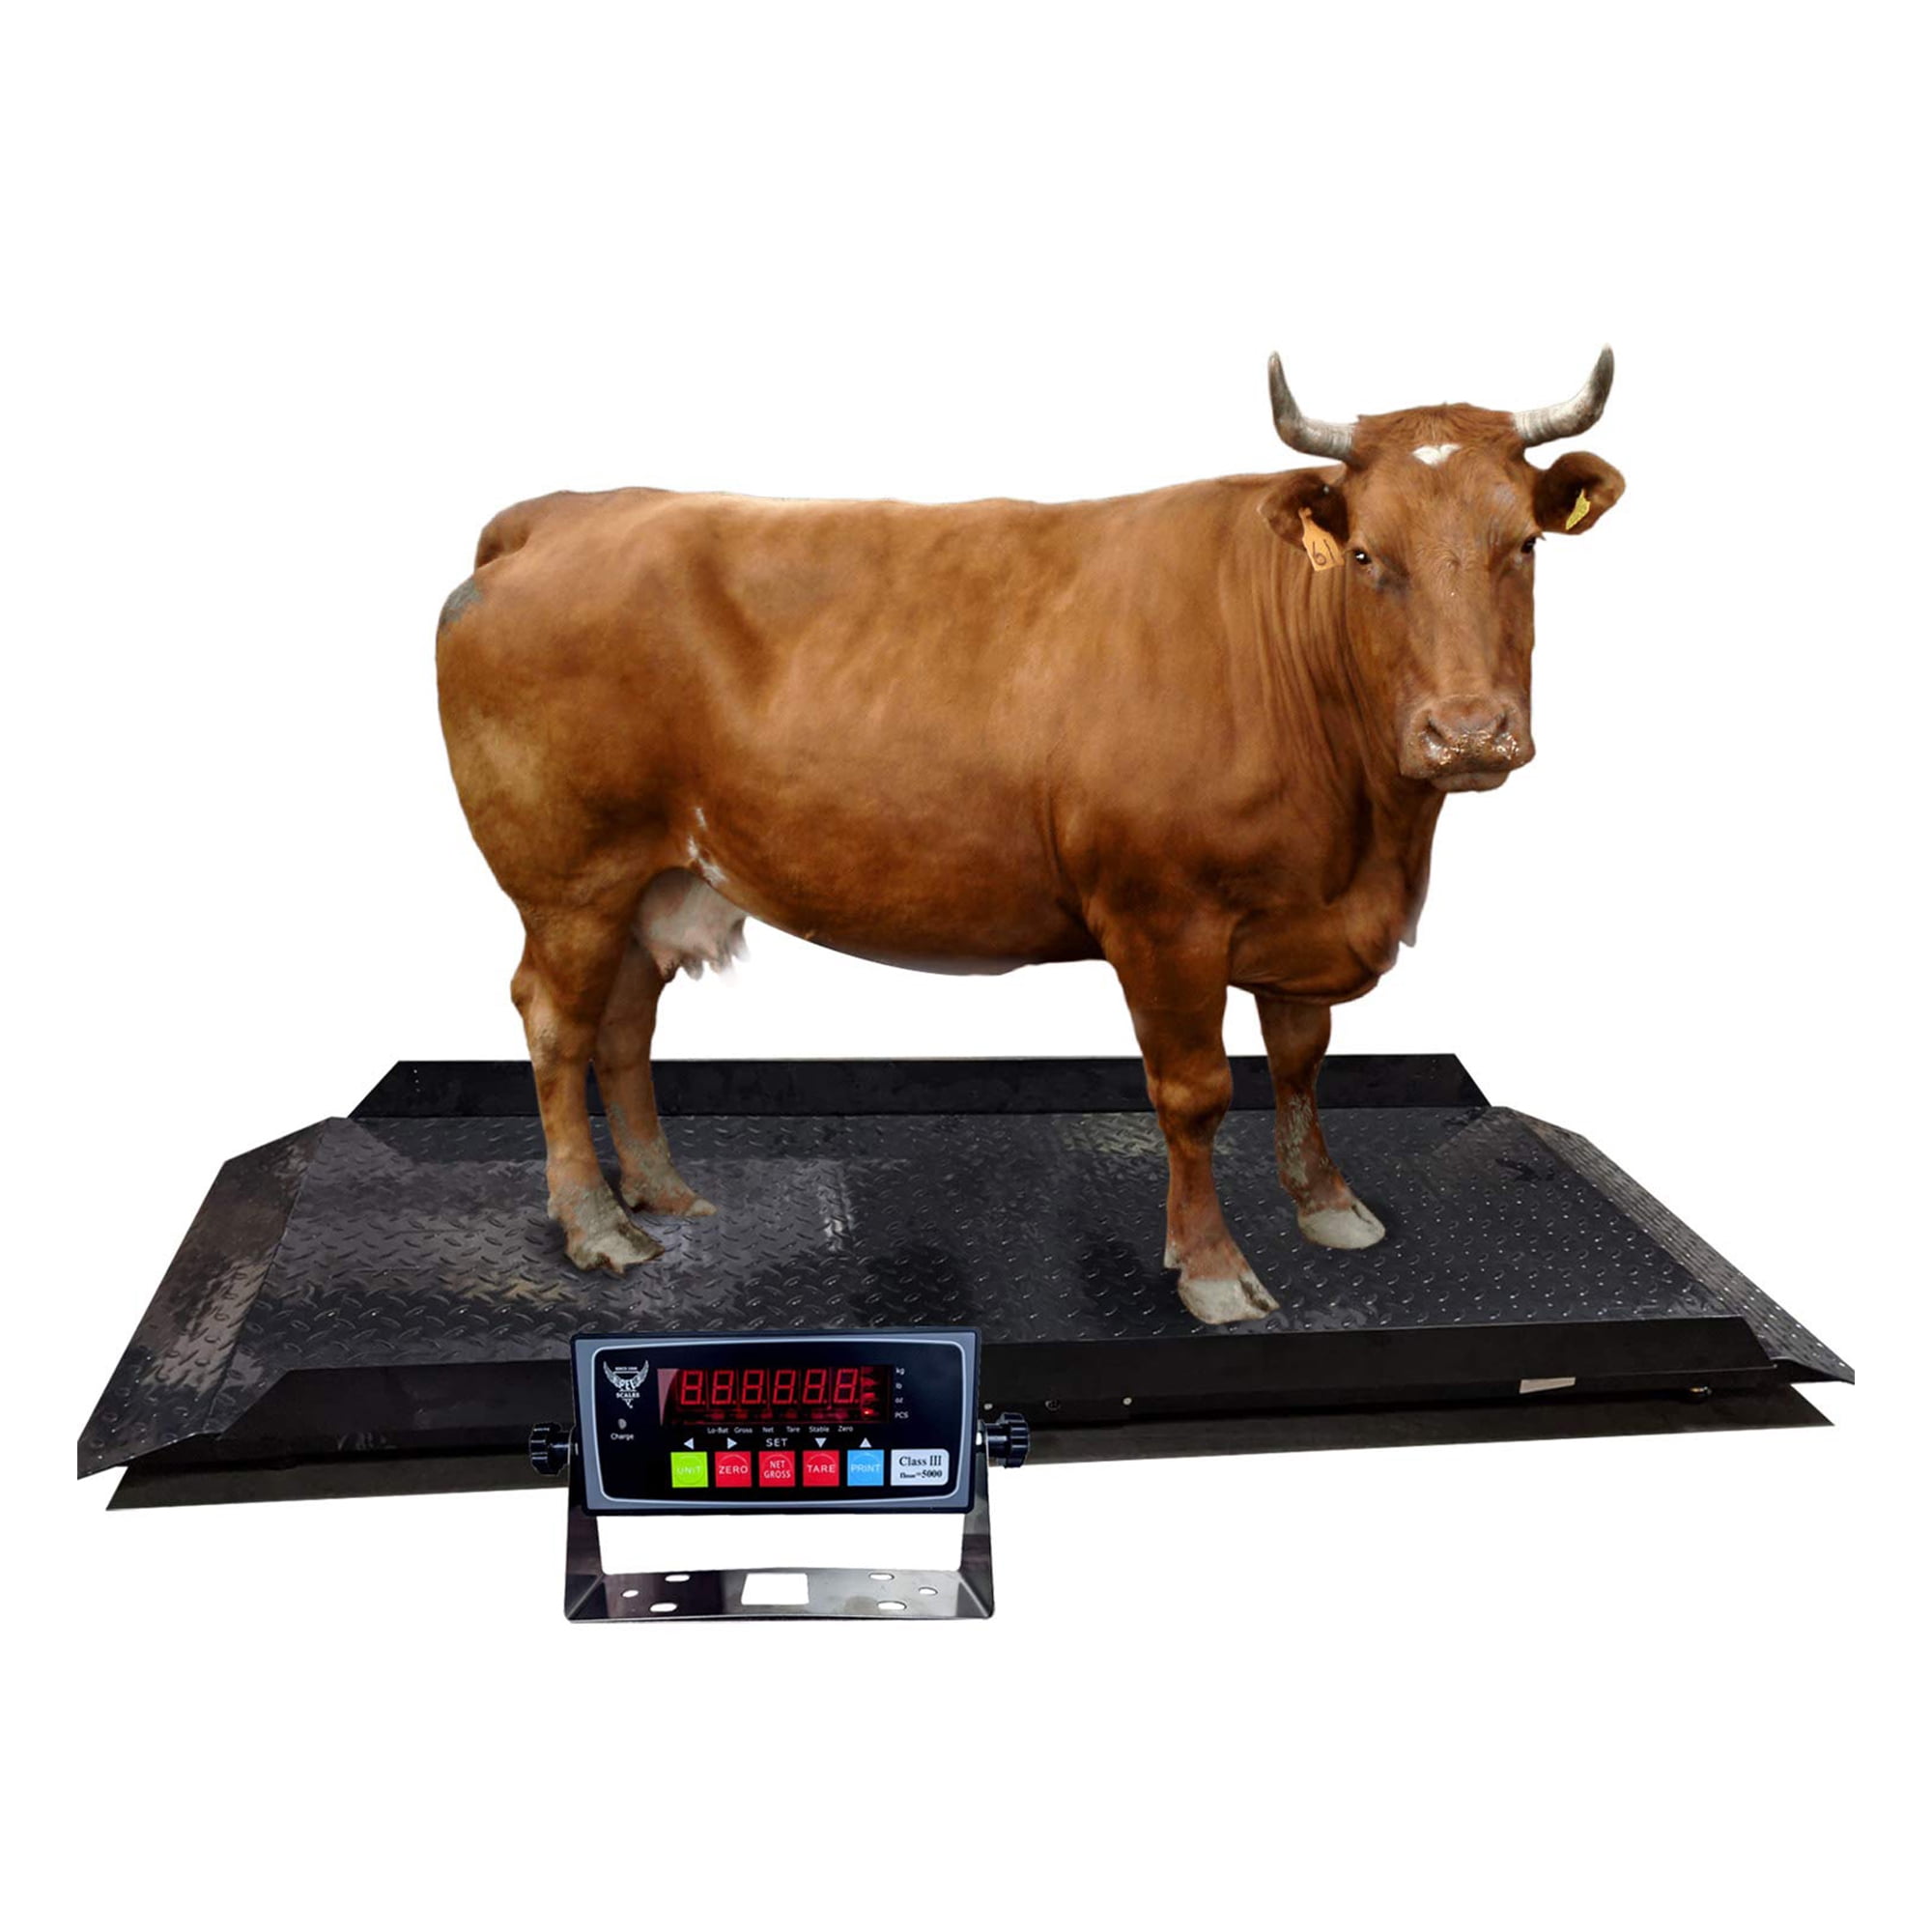 PEC Scales 700lbs Vet Animal Scale/Farm Livestock Scale, 42″ x 20″ for